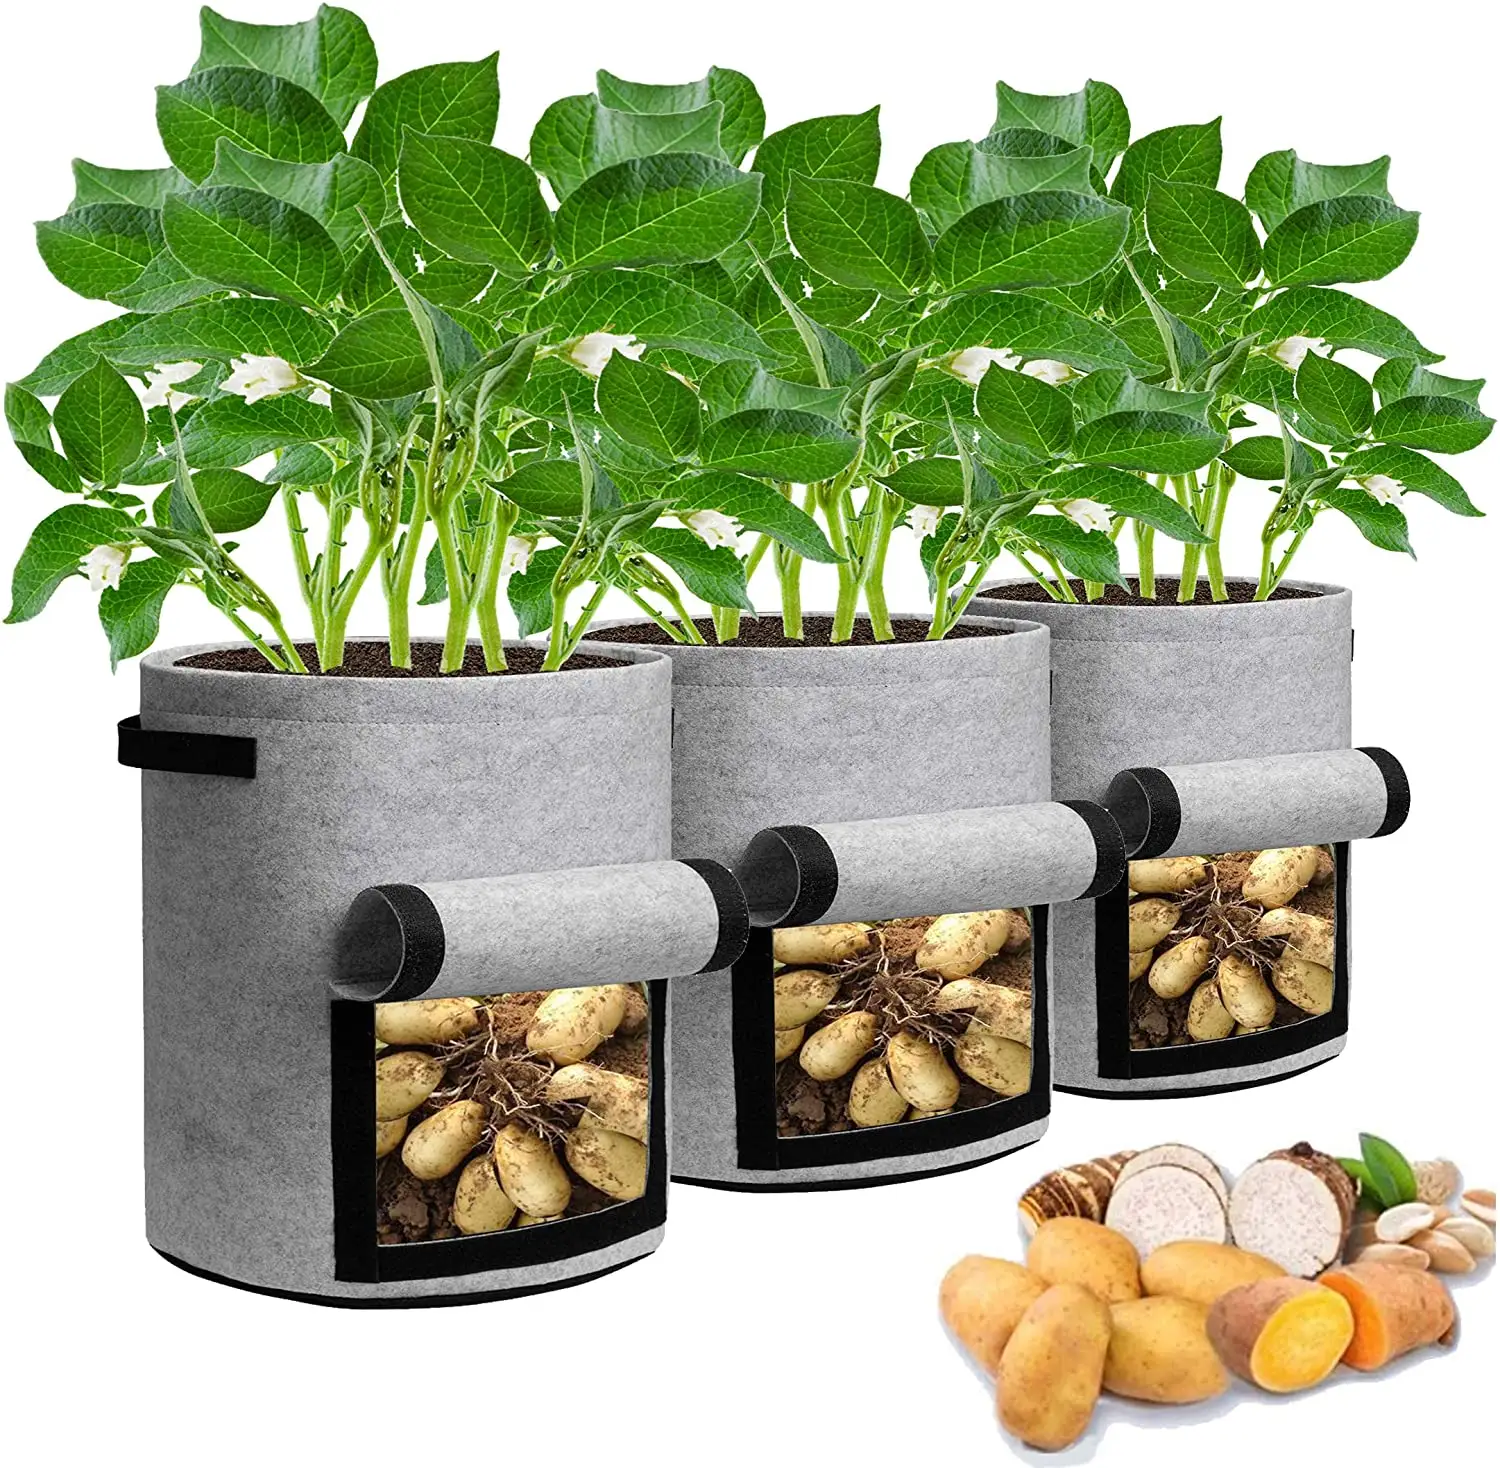 Fabric Pots Grow Bags 10 Gallon 25 Gallon Customized Felt Fabric Plant Growing Bags